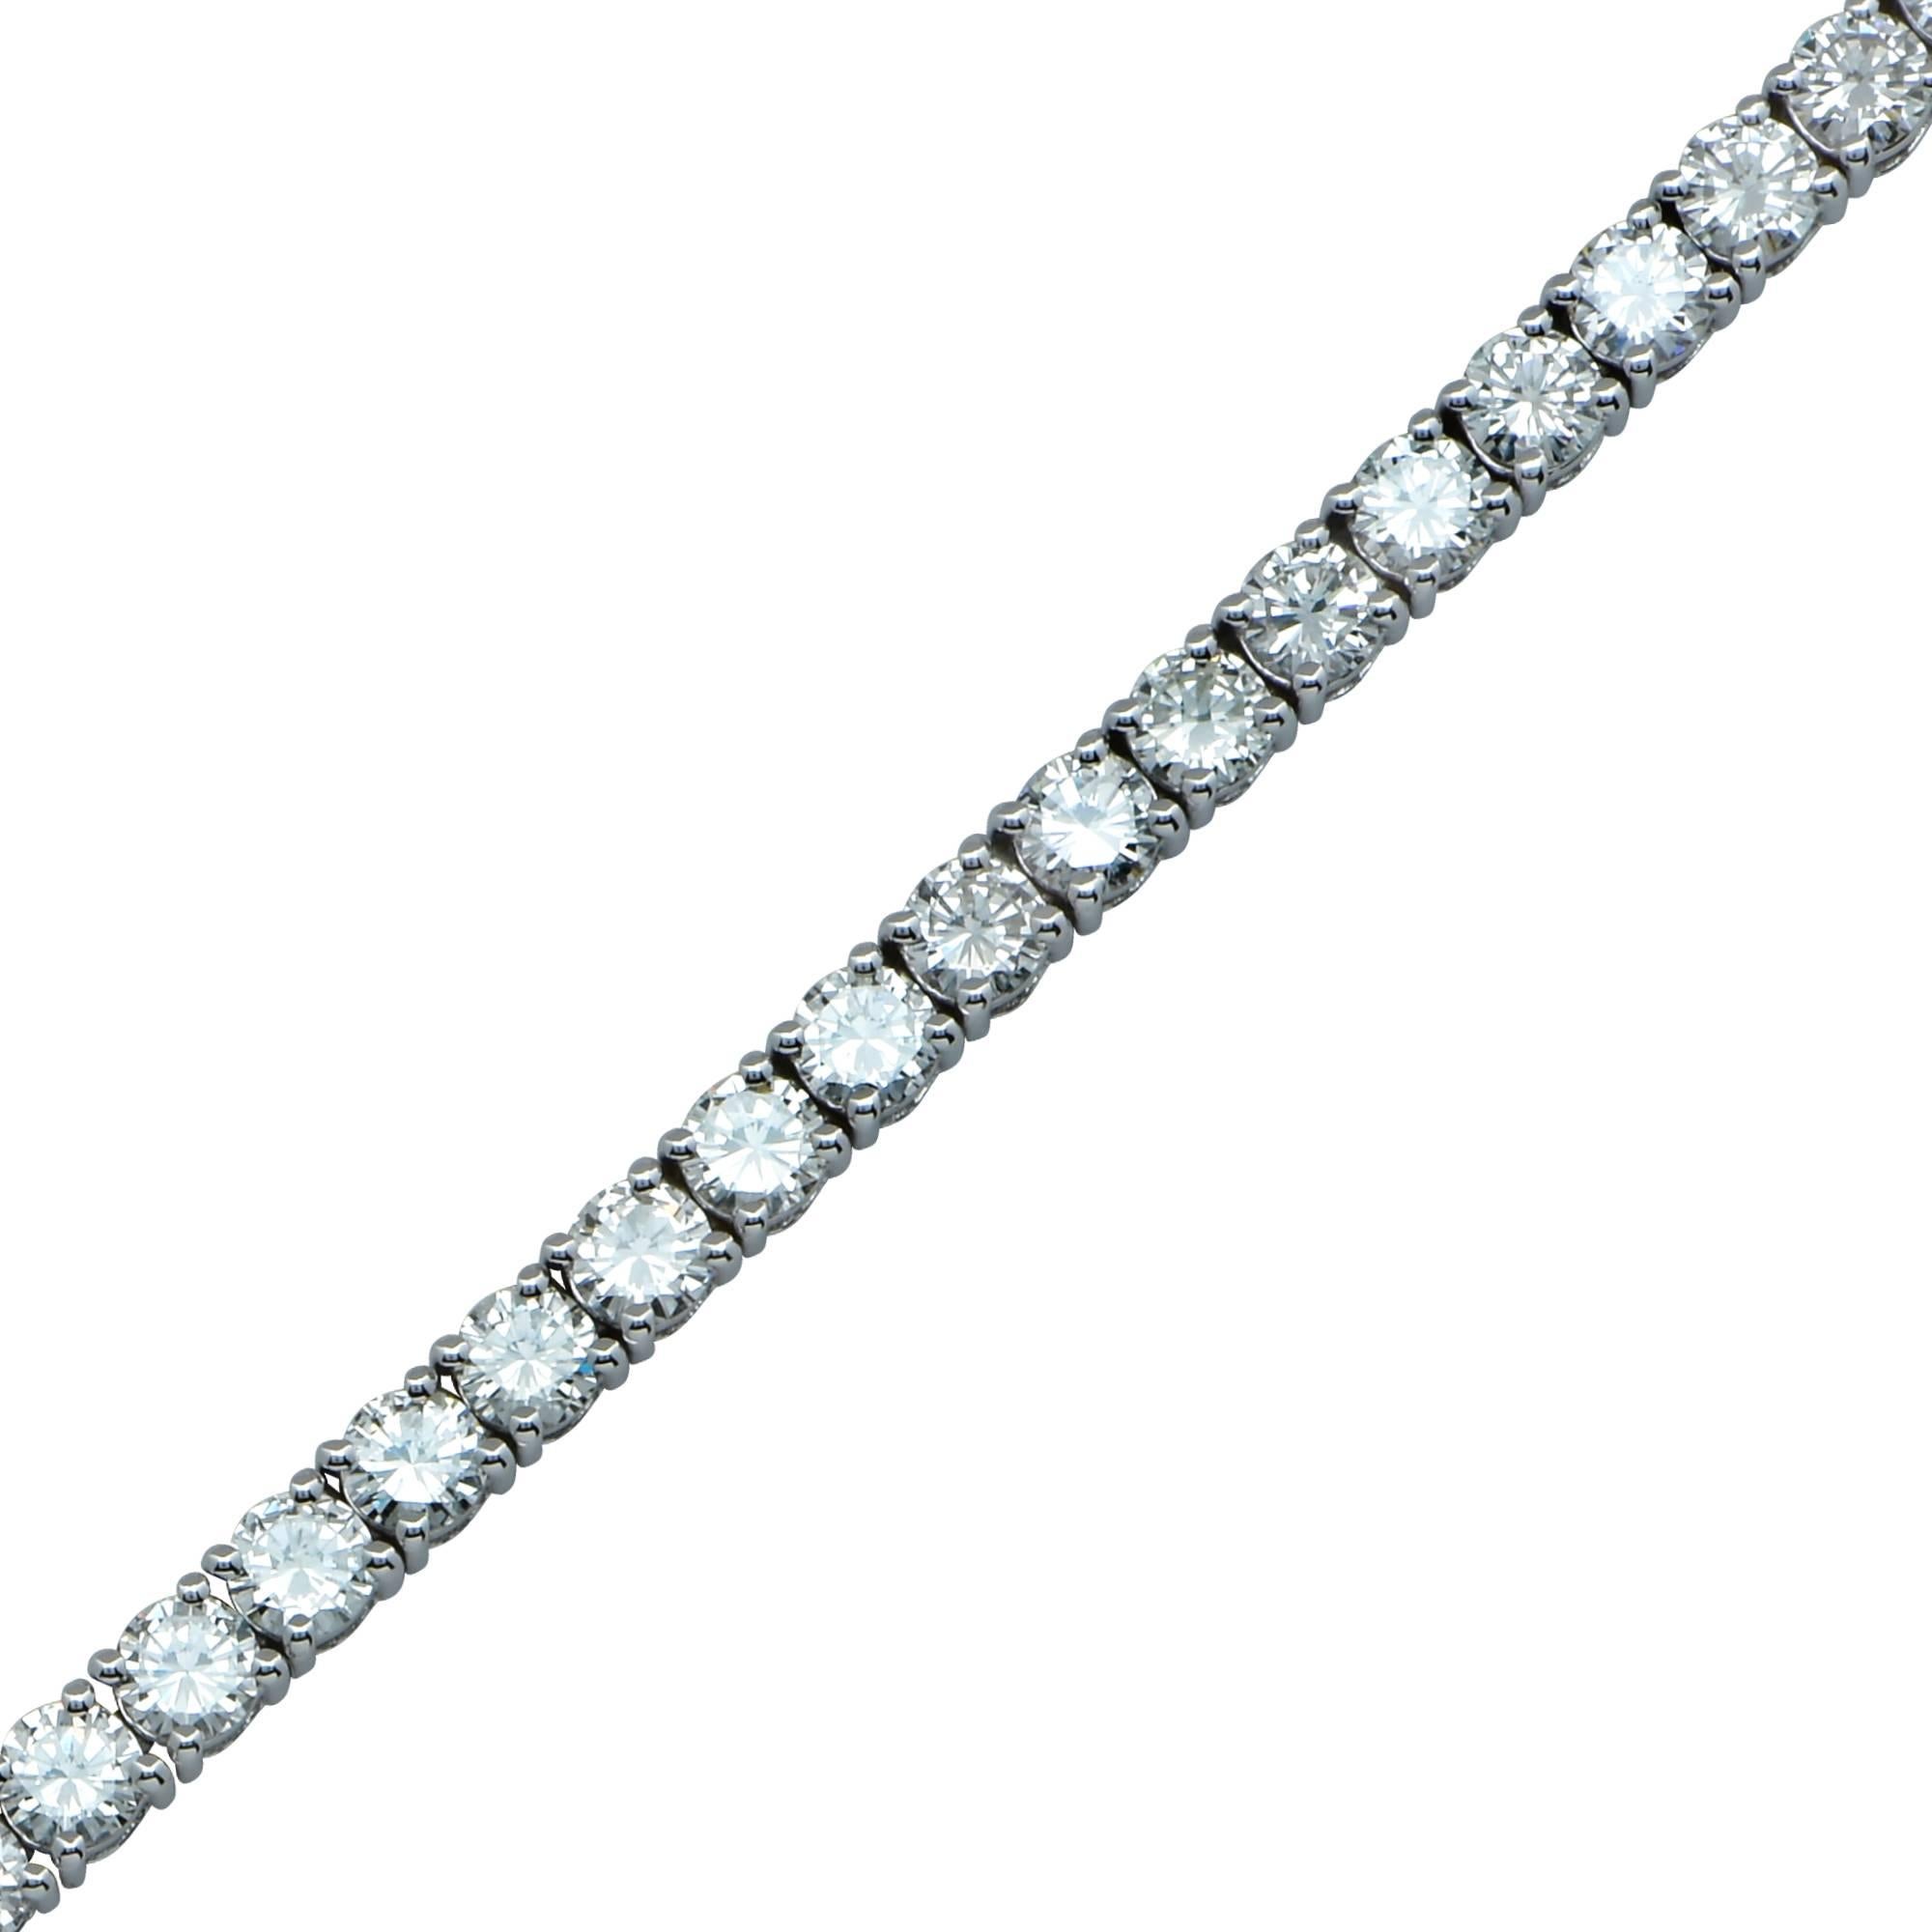 6.44 Carat Diamond Tennis Bracelet